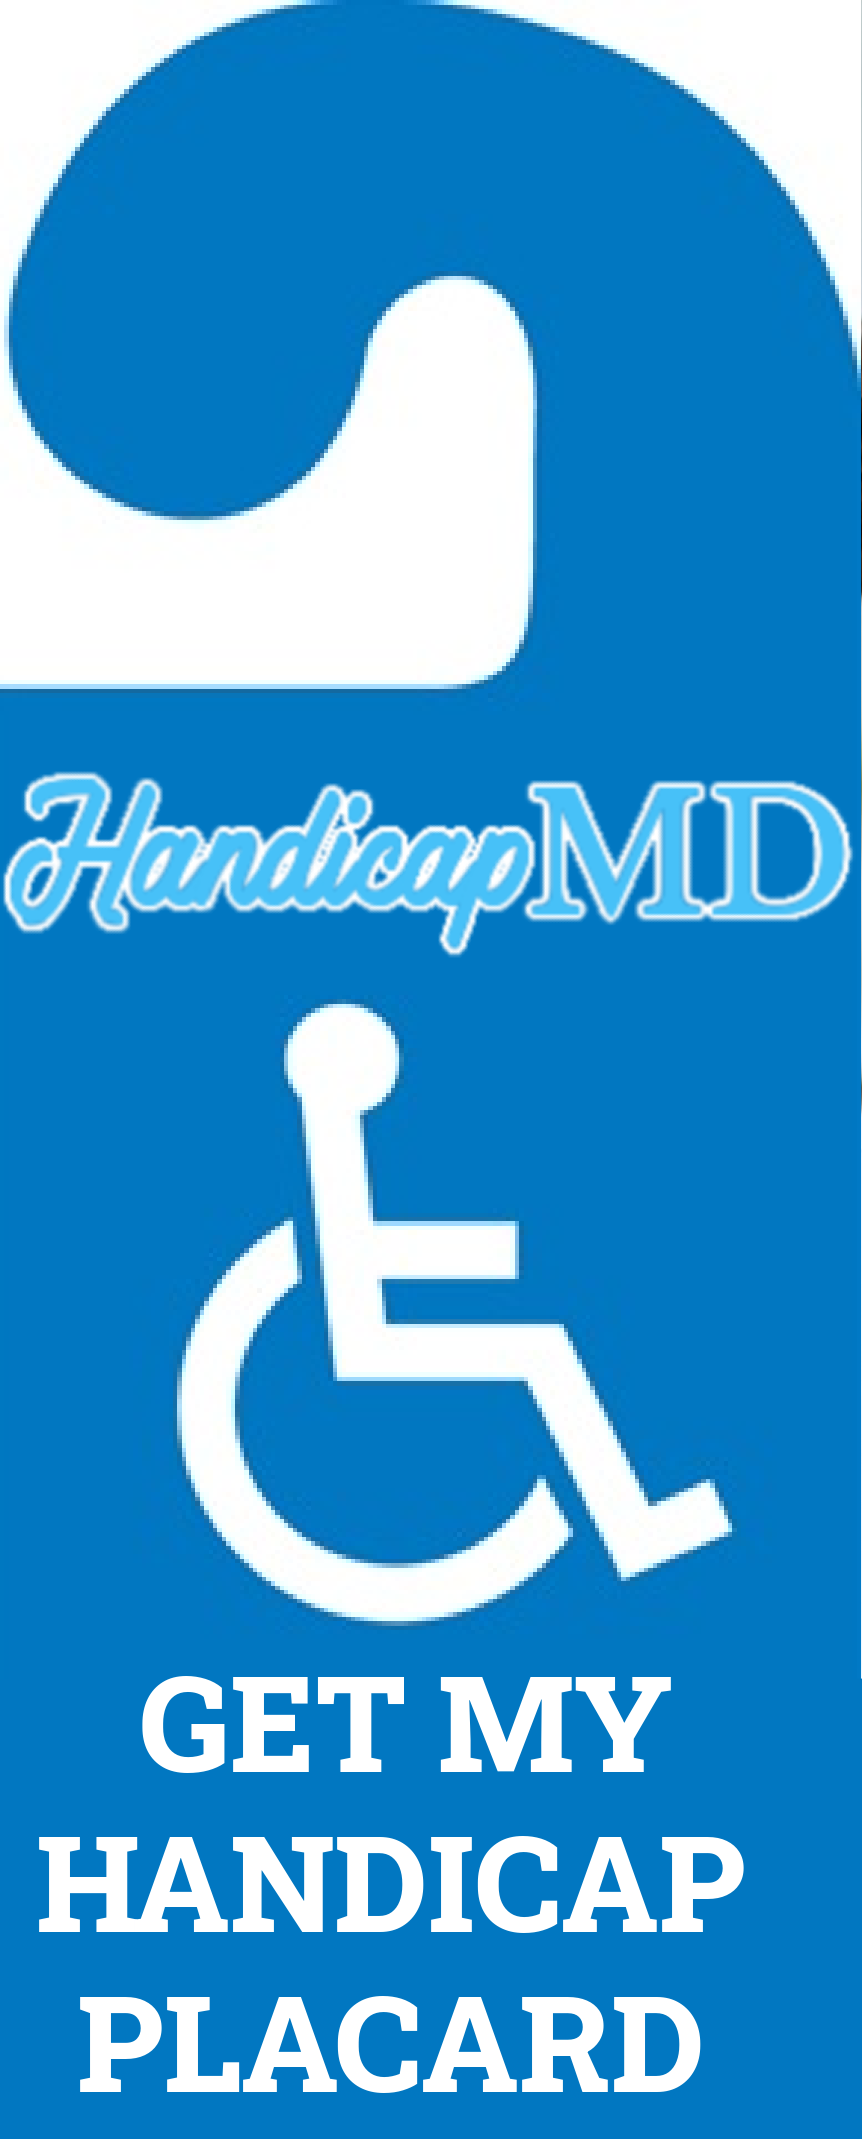 South Dakota Handicap Parking Placards